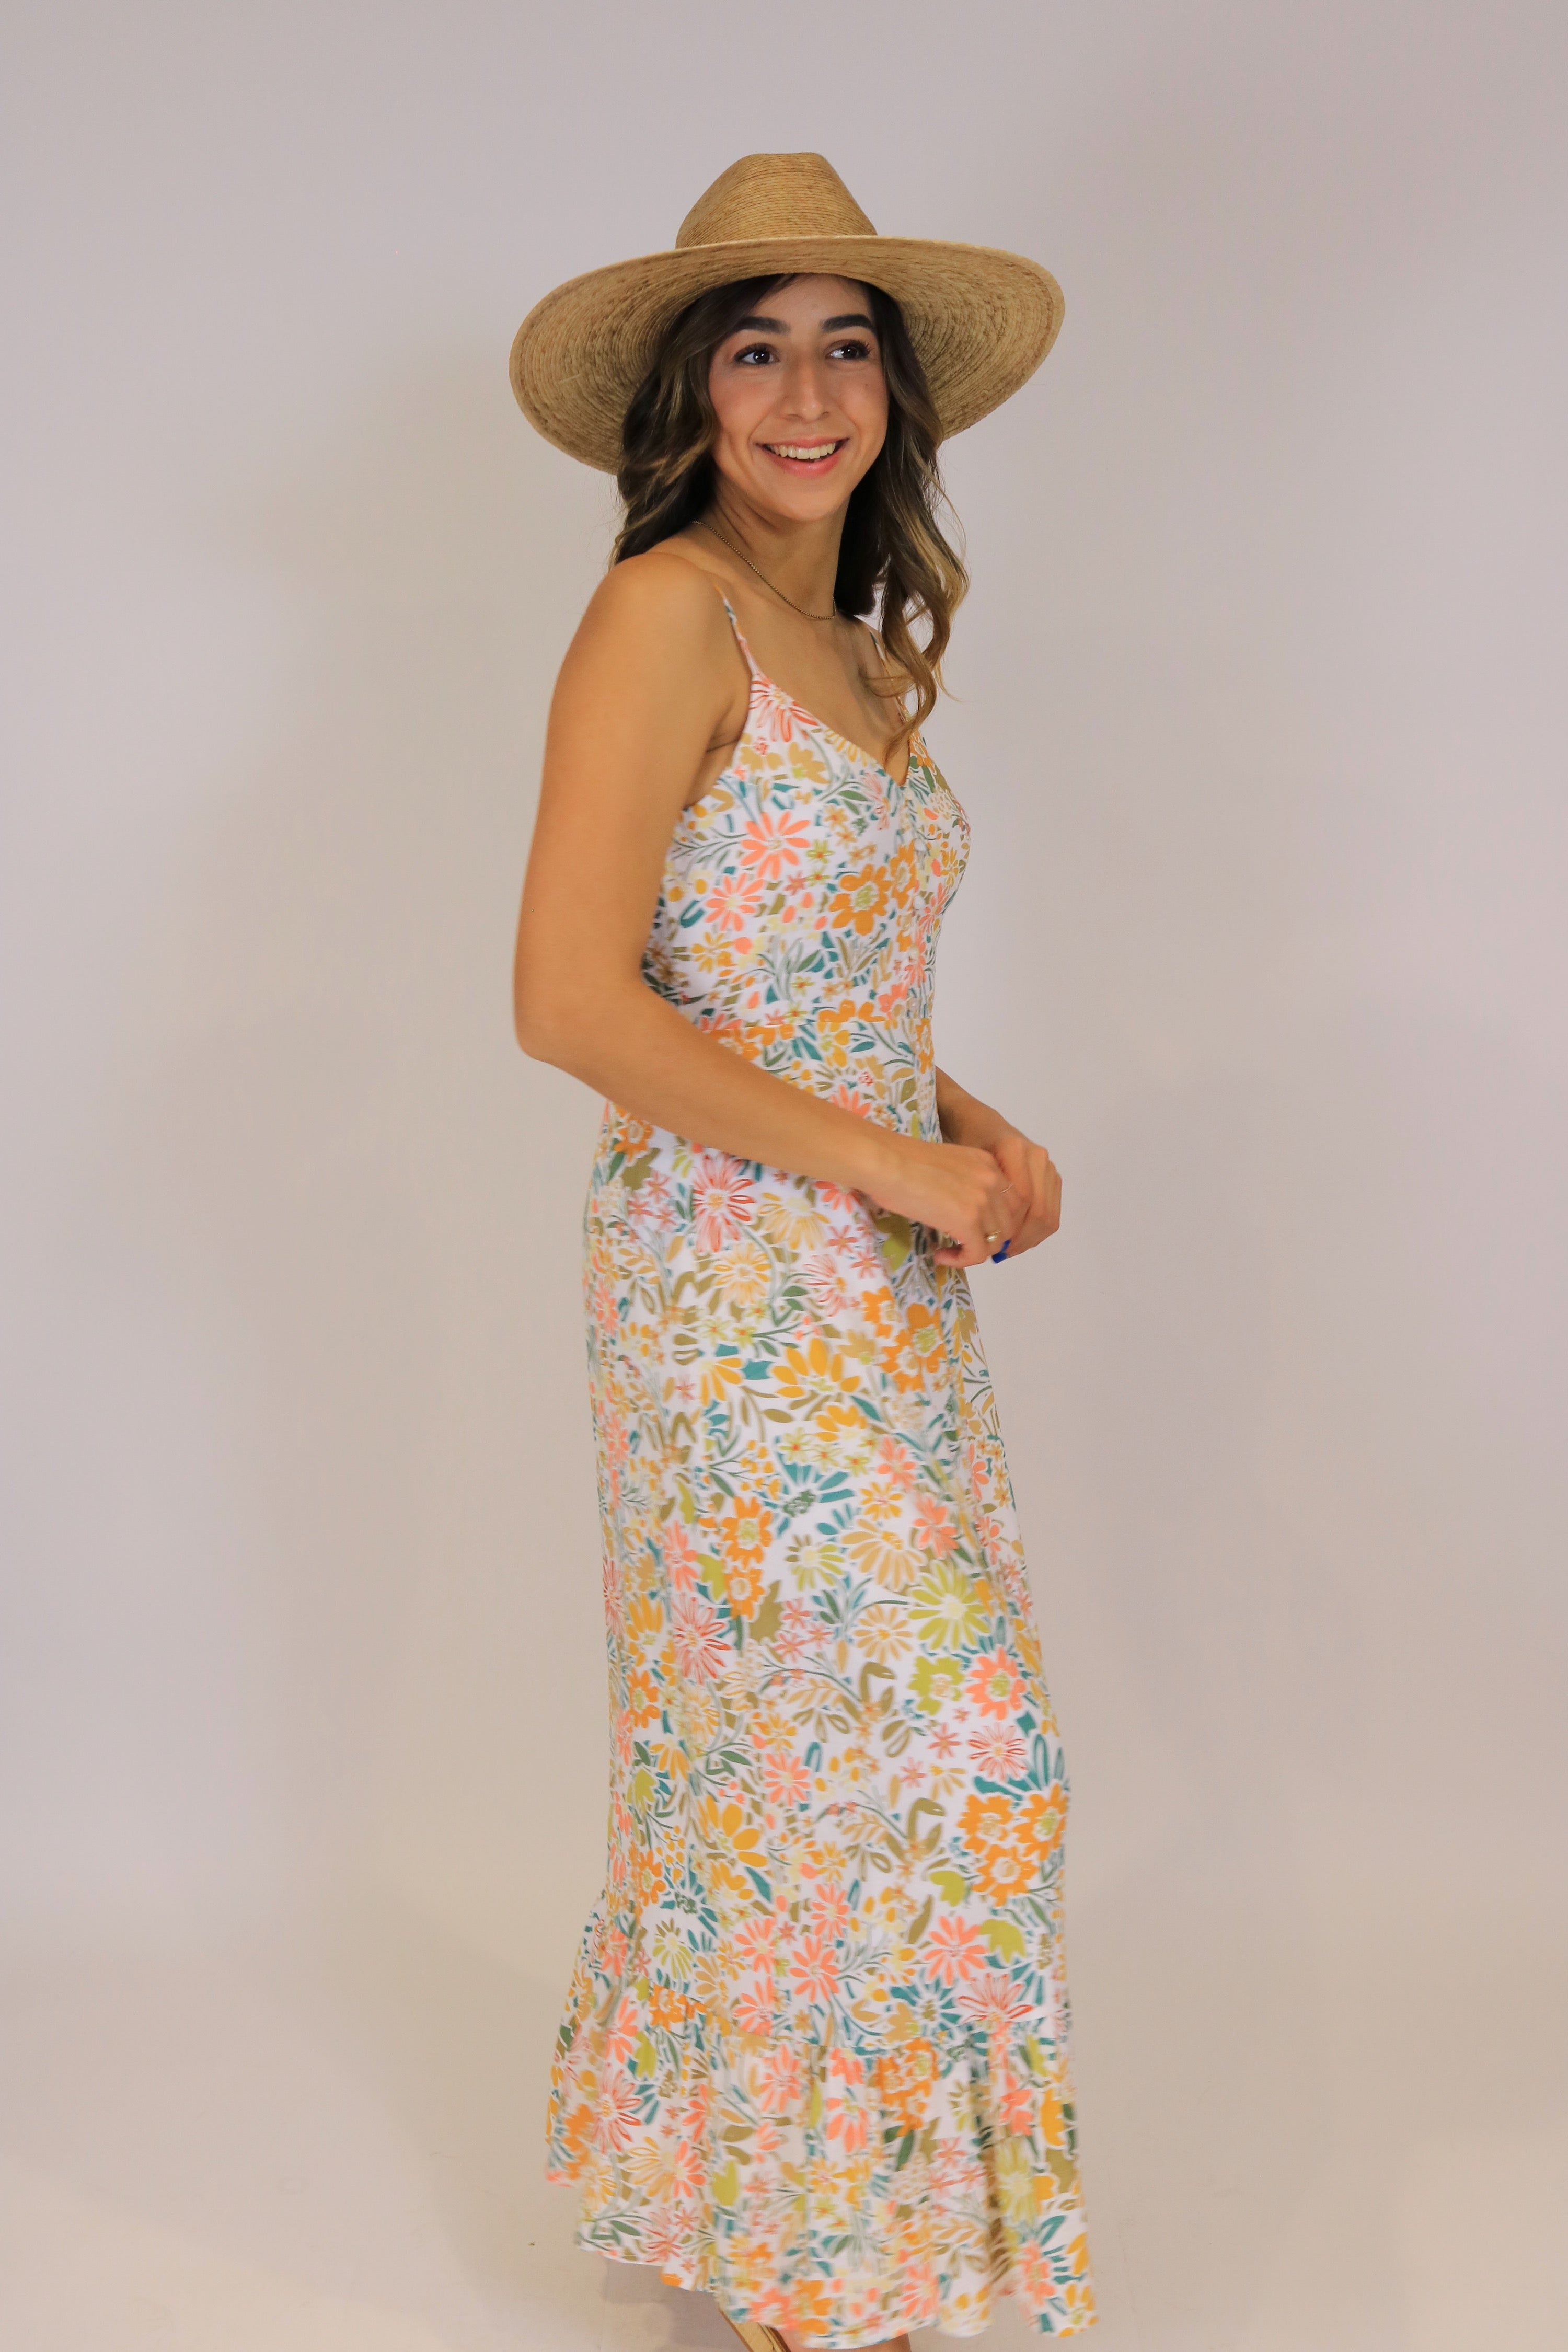 Buy SKYLER FASHION Blended Women's DANGRI Dress with Top (M, MEHROON) at